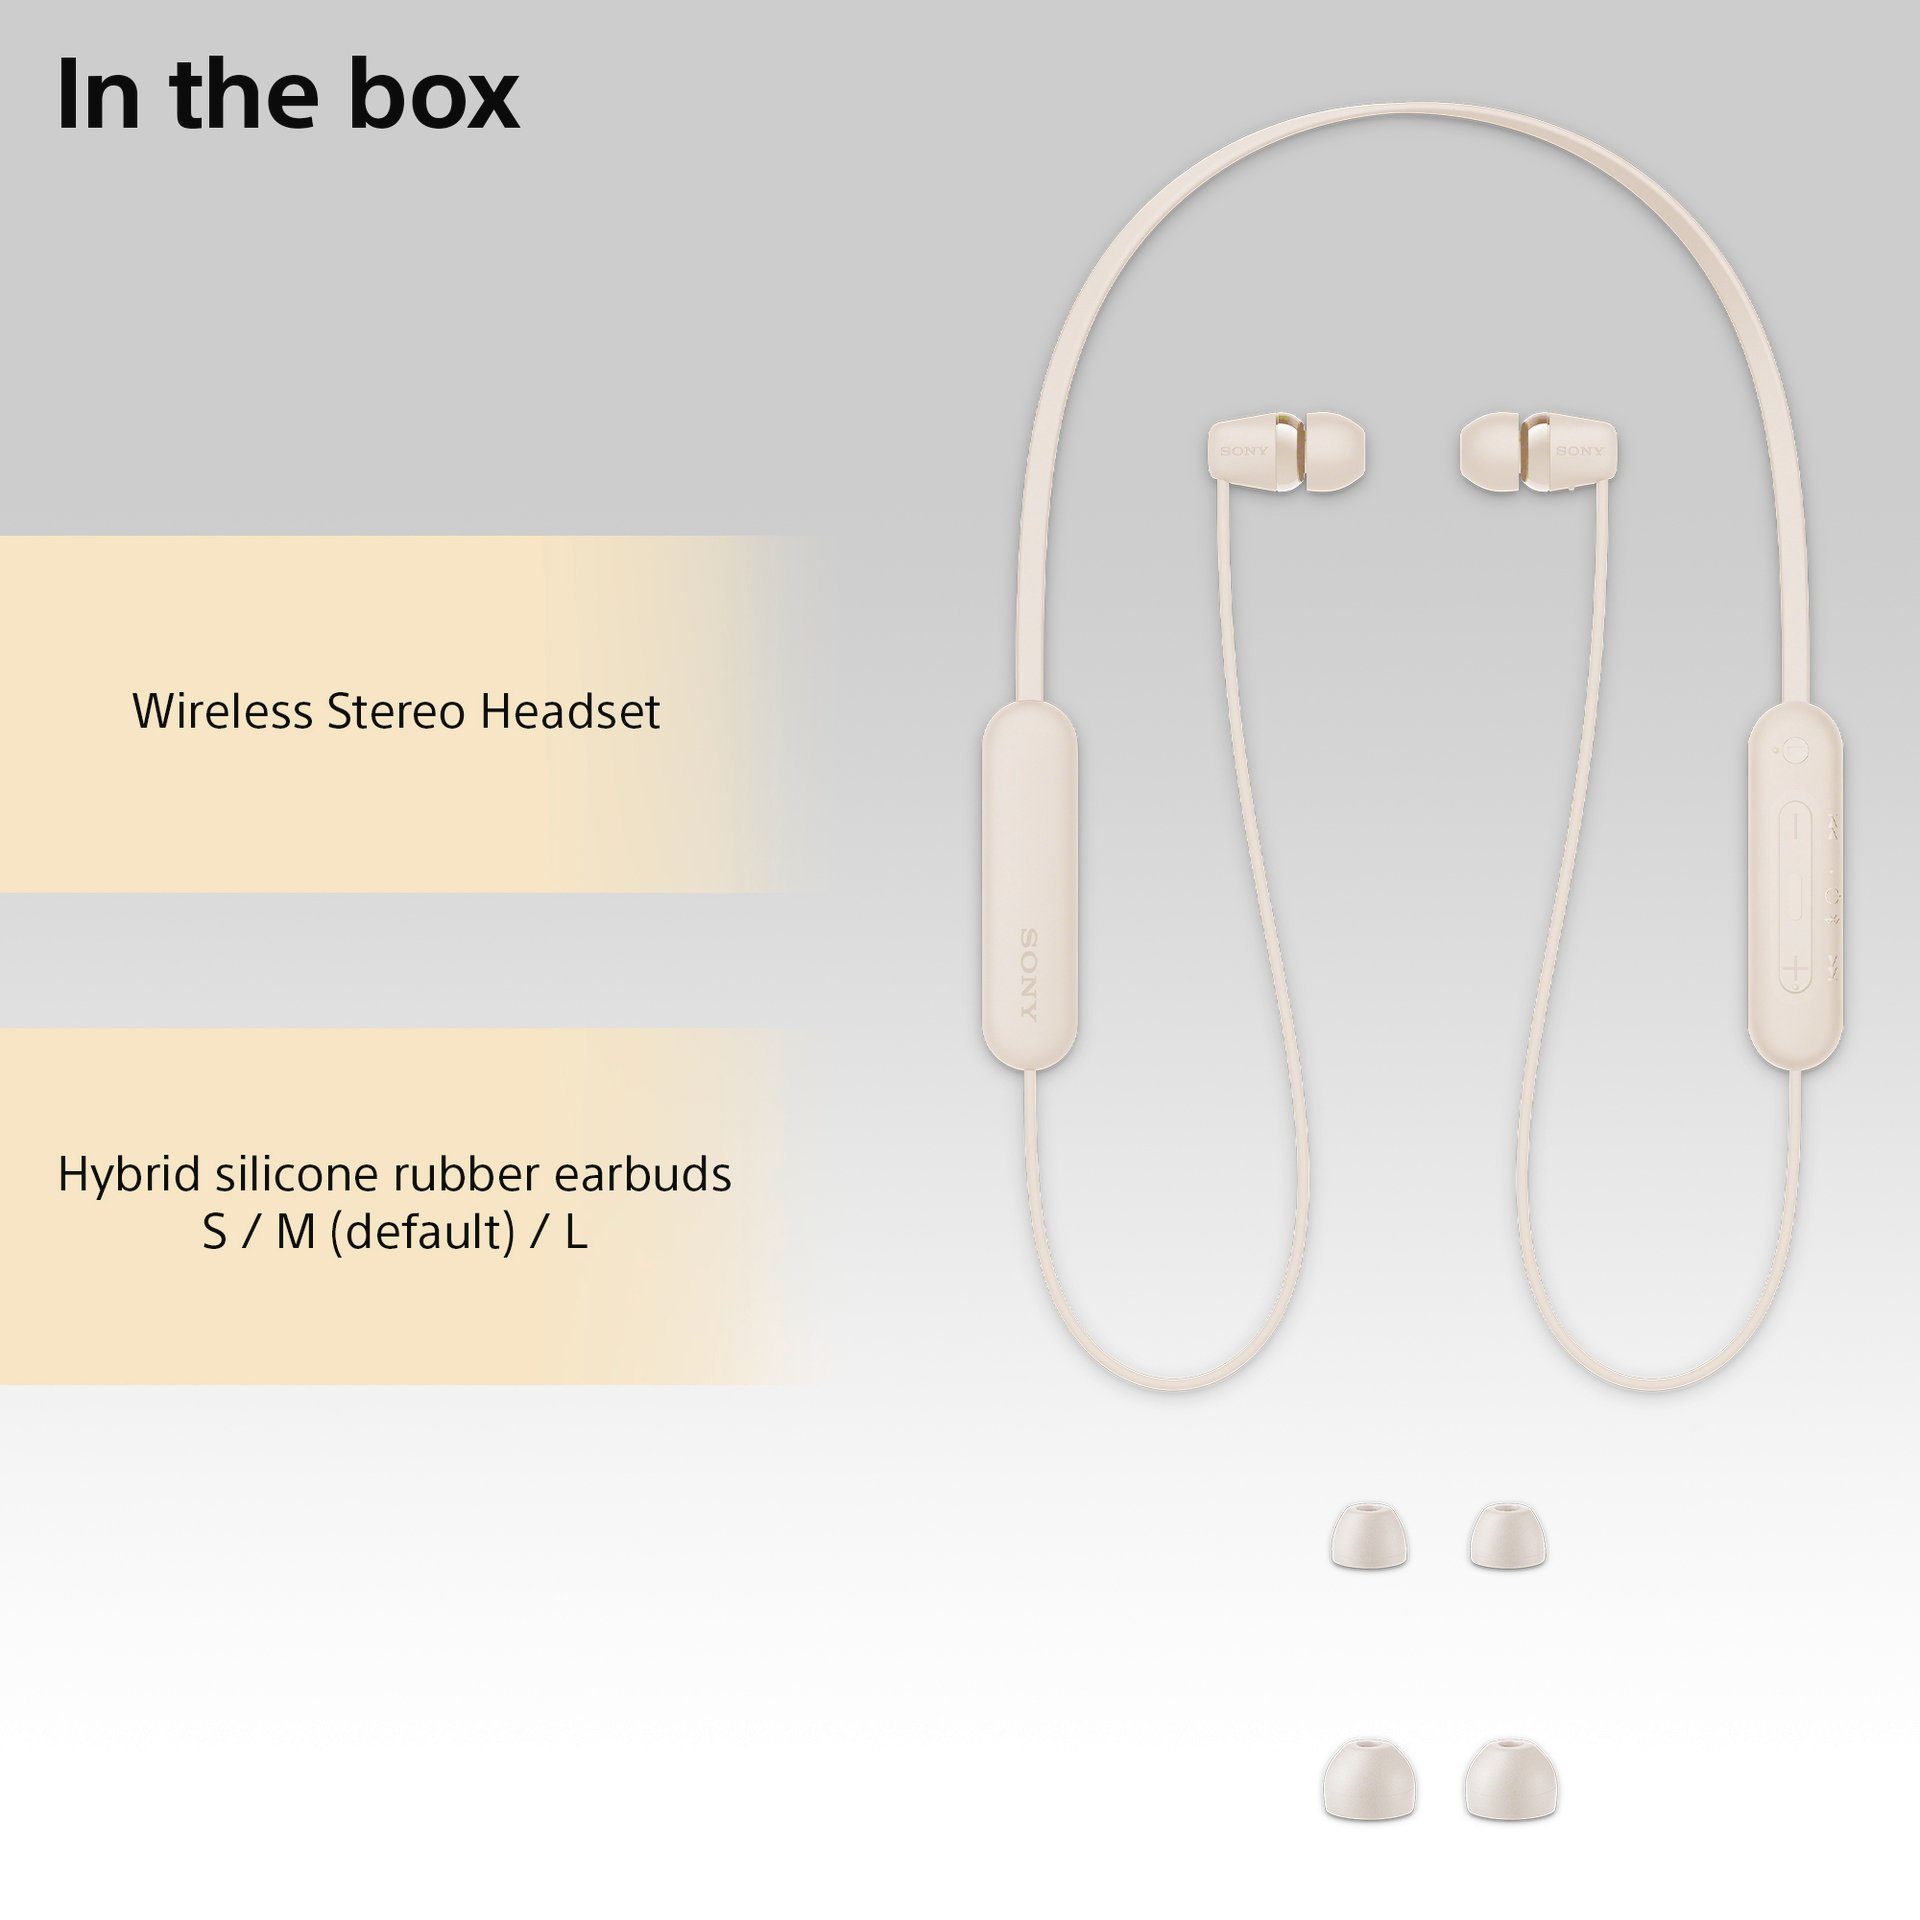 Sony In-Ear Kopfhörer WI-C100 In-Ear-Kopfhörer beige (Sprachsteuerung)